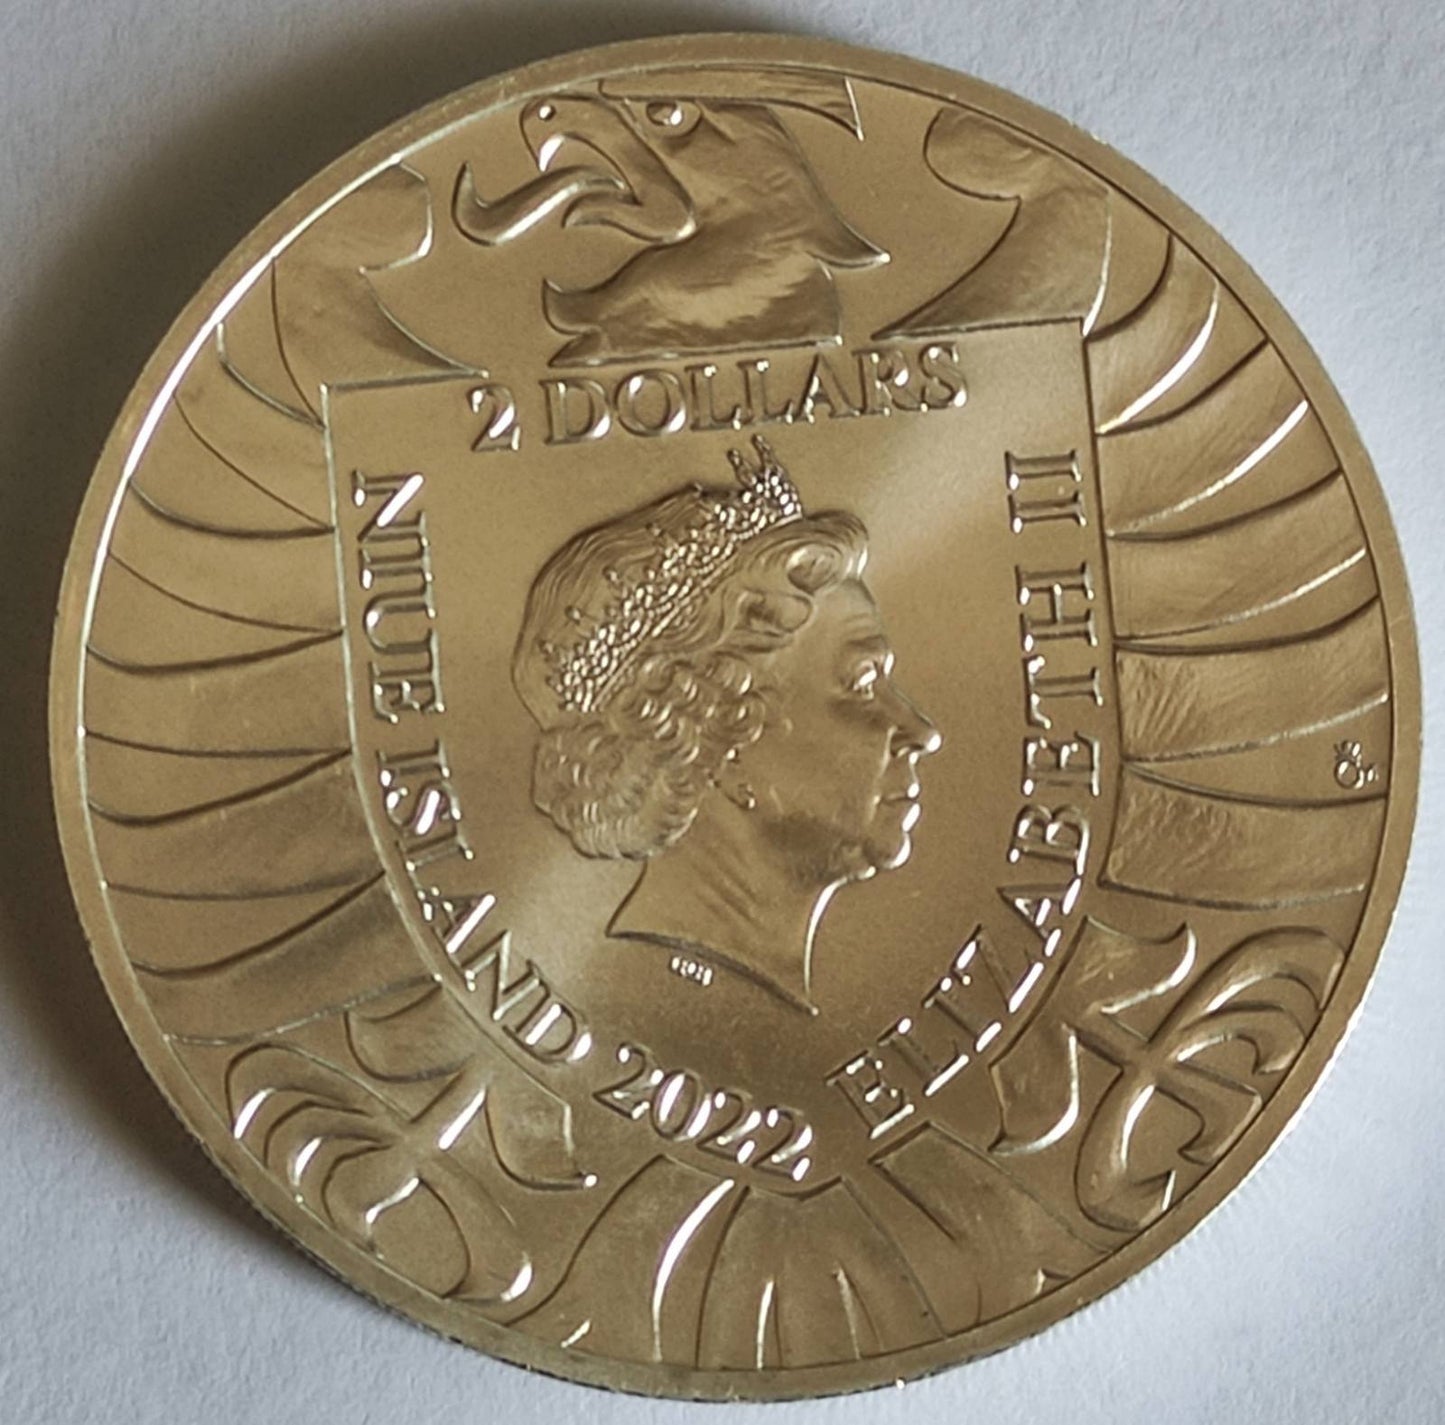 2022 Niue Czech Lion 1 oz Silver Coin BU in Capsule